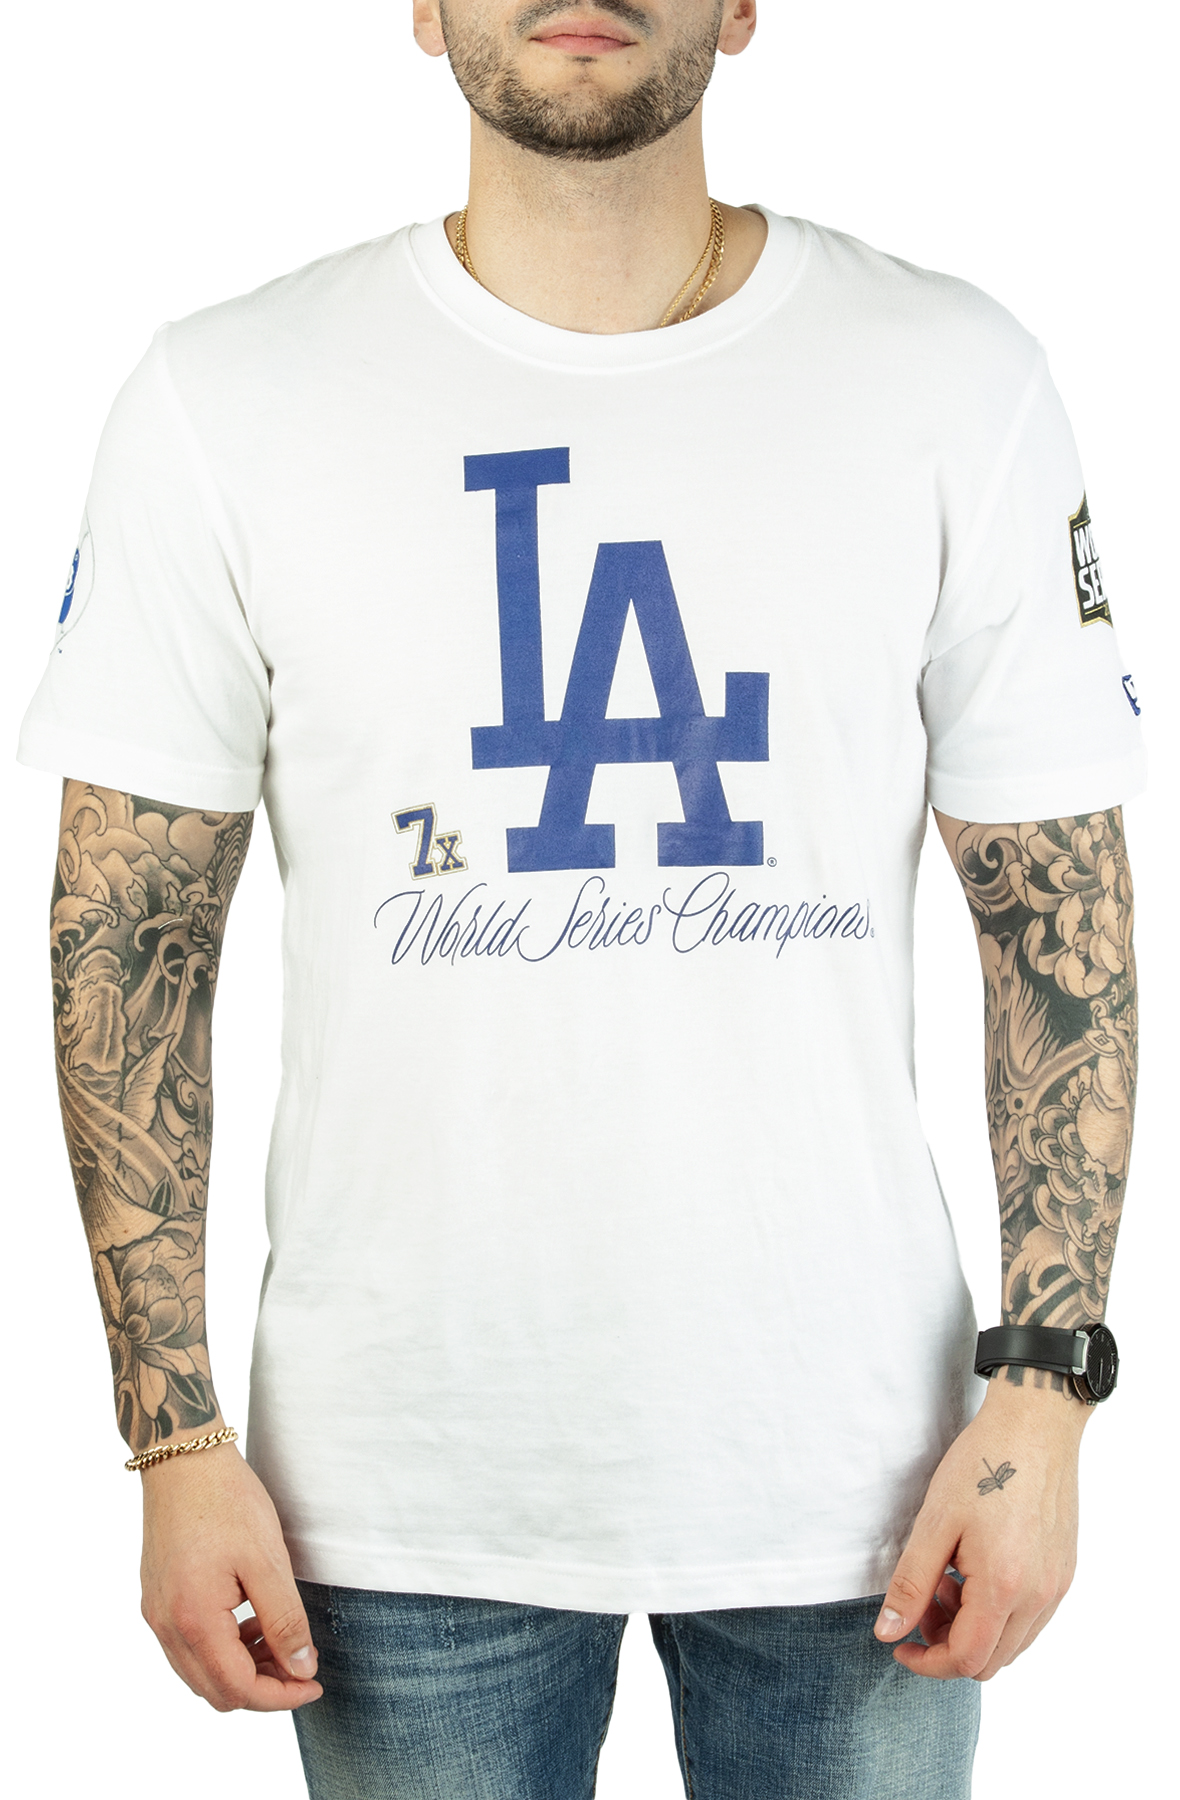 Lids Los Angeles Dodgers New Era Historical Championship T-Shirt - White